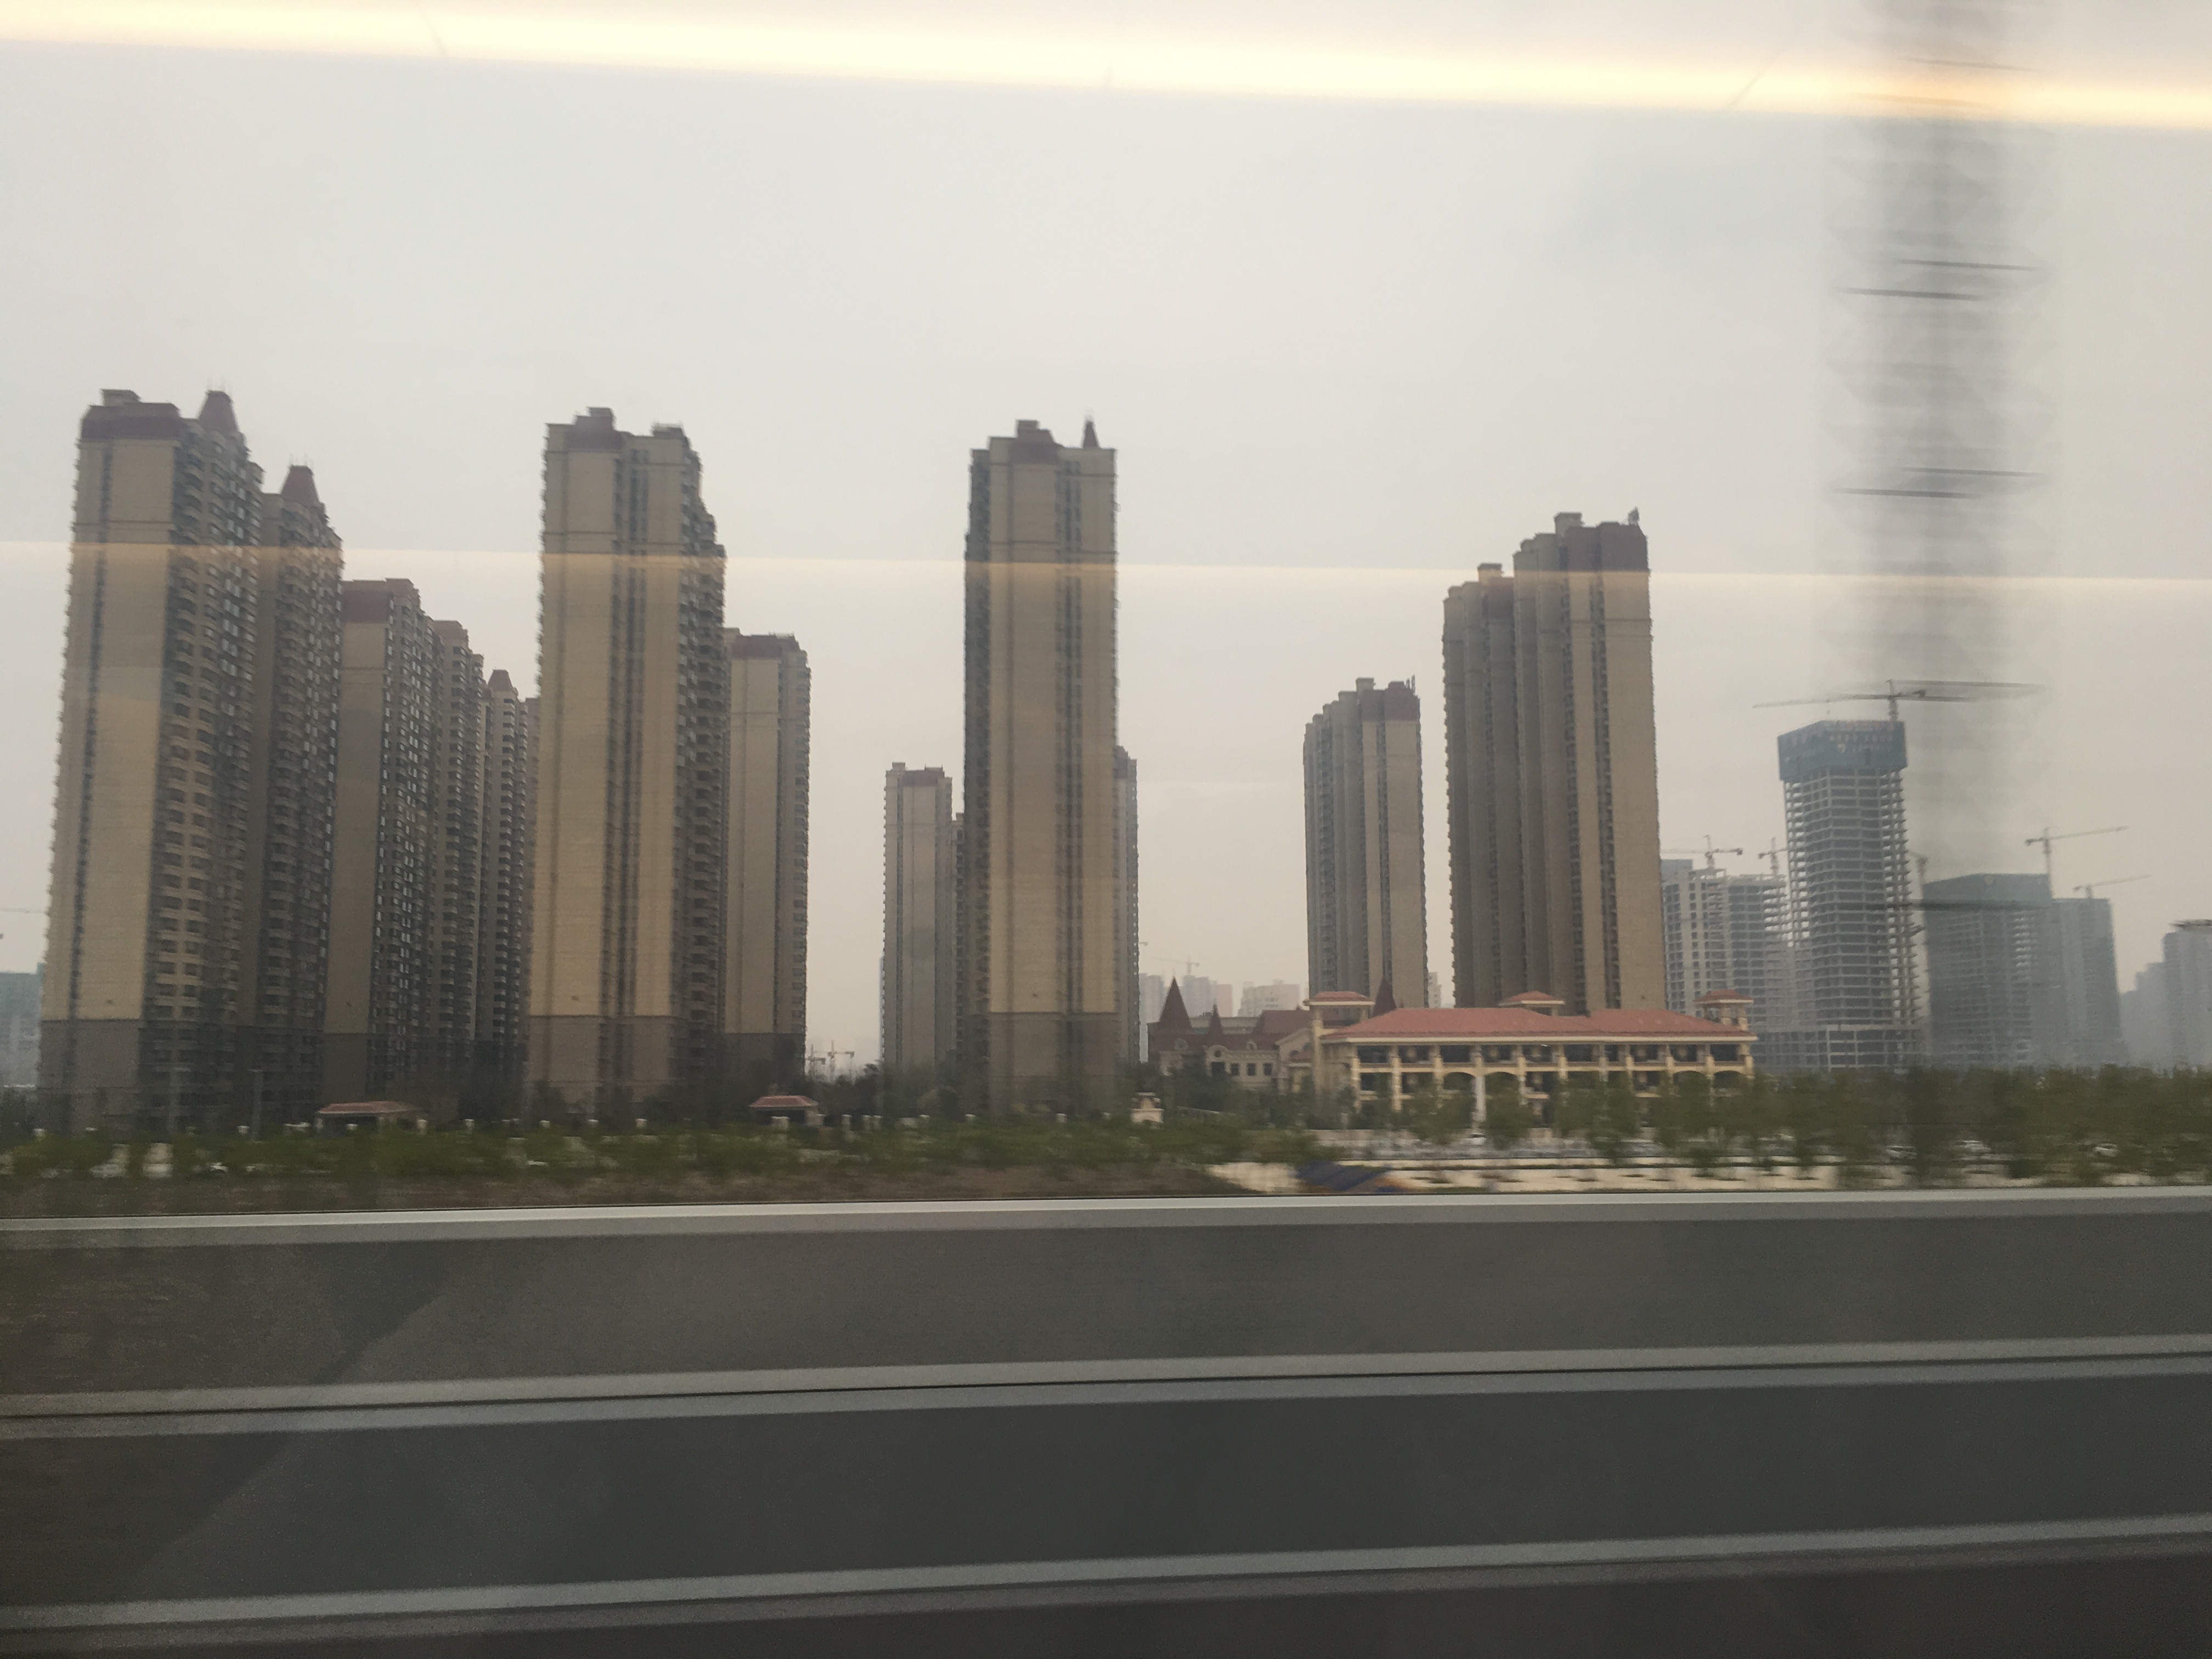 China rapid urban development